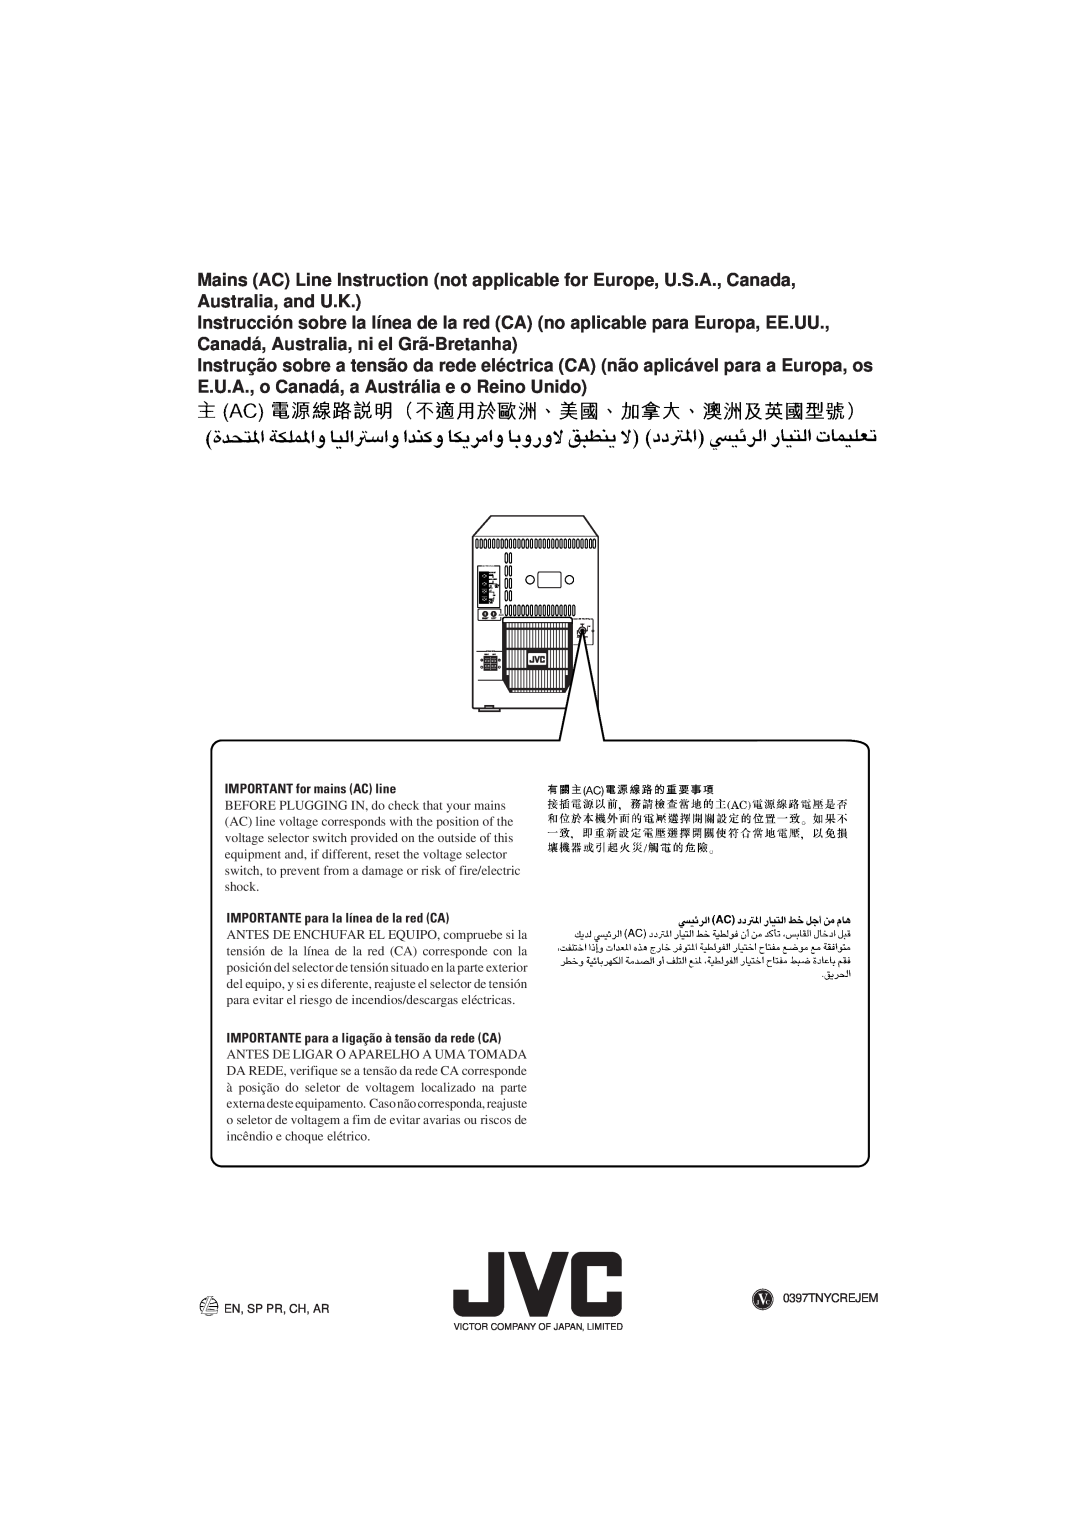 JVC CA-D501T, MX-D401T manual IMPORTANT for mains AC line, IMPORTANTE para la línea de la red CA 